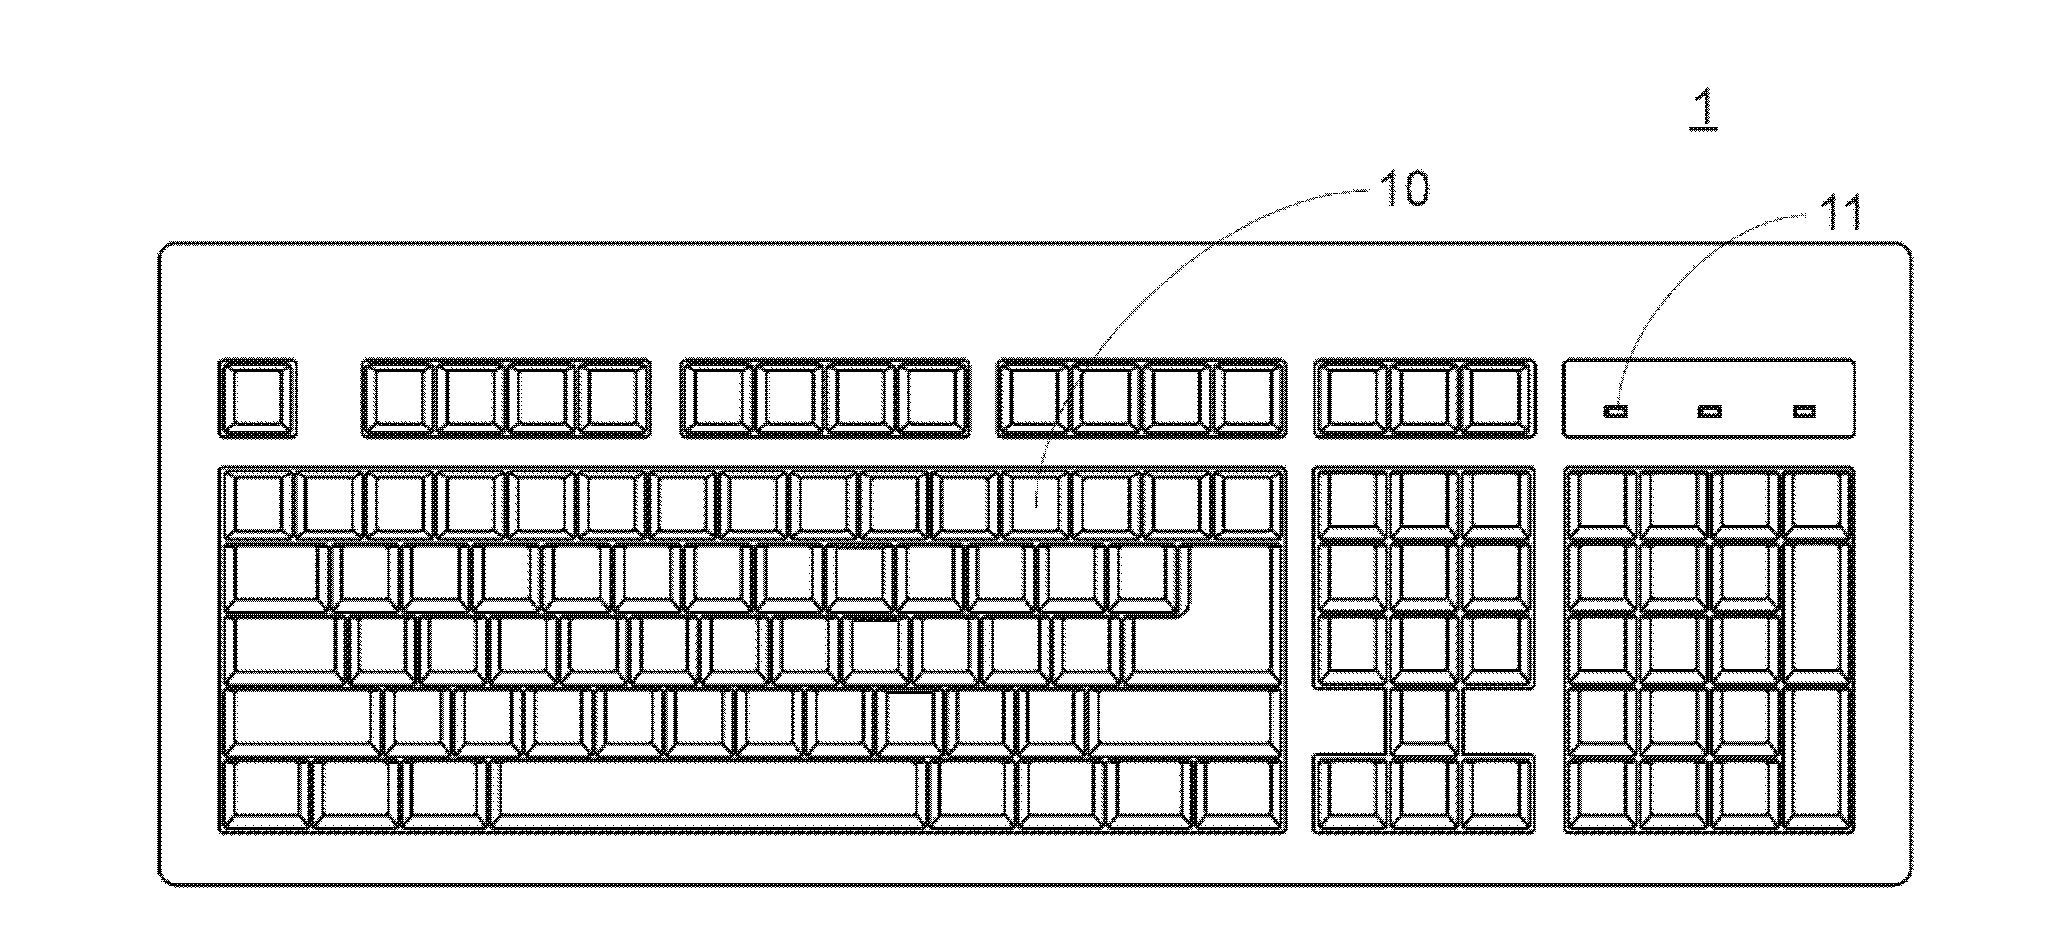 Keyboard device with light emitting key